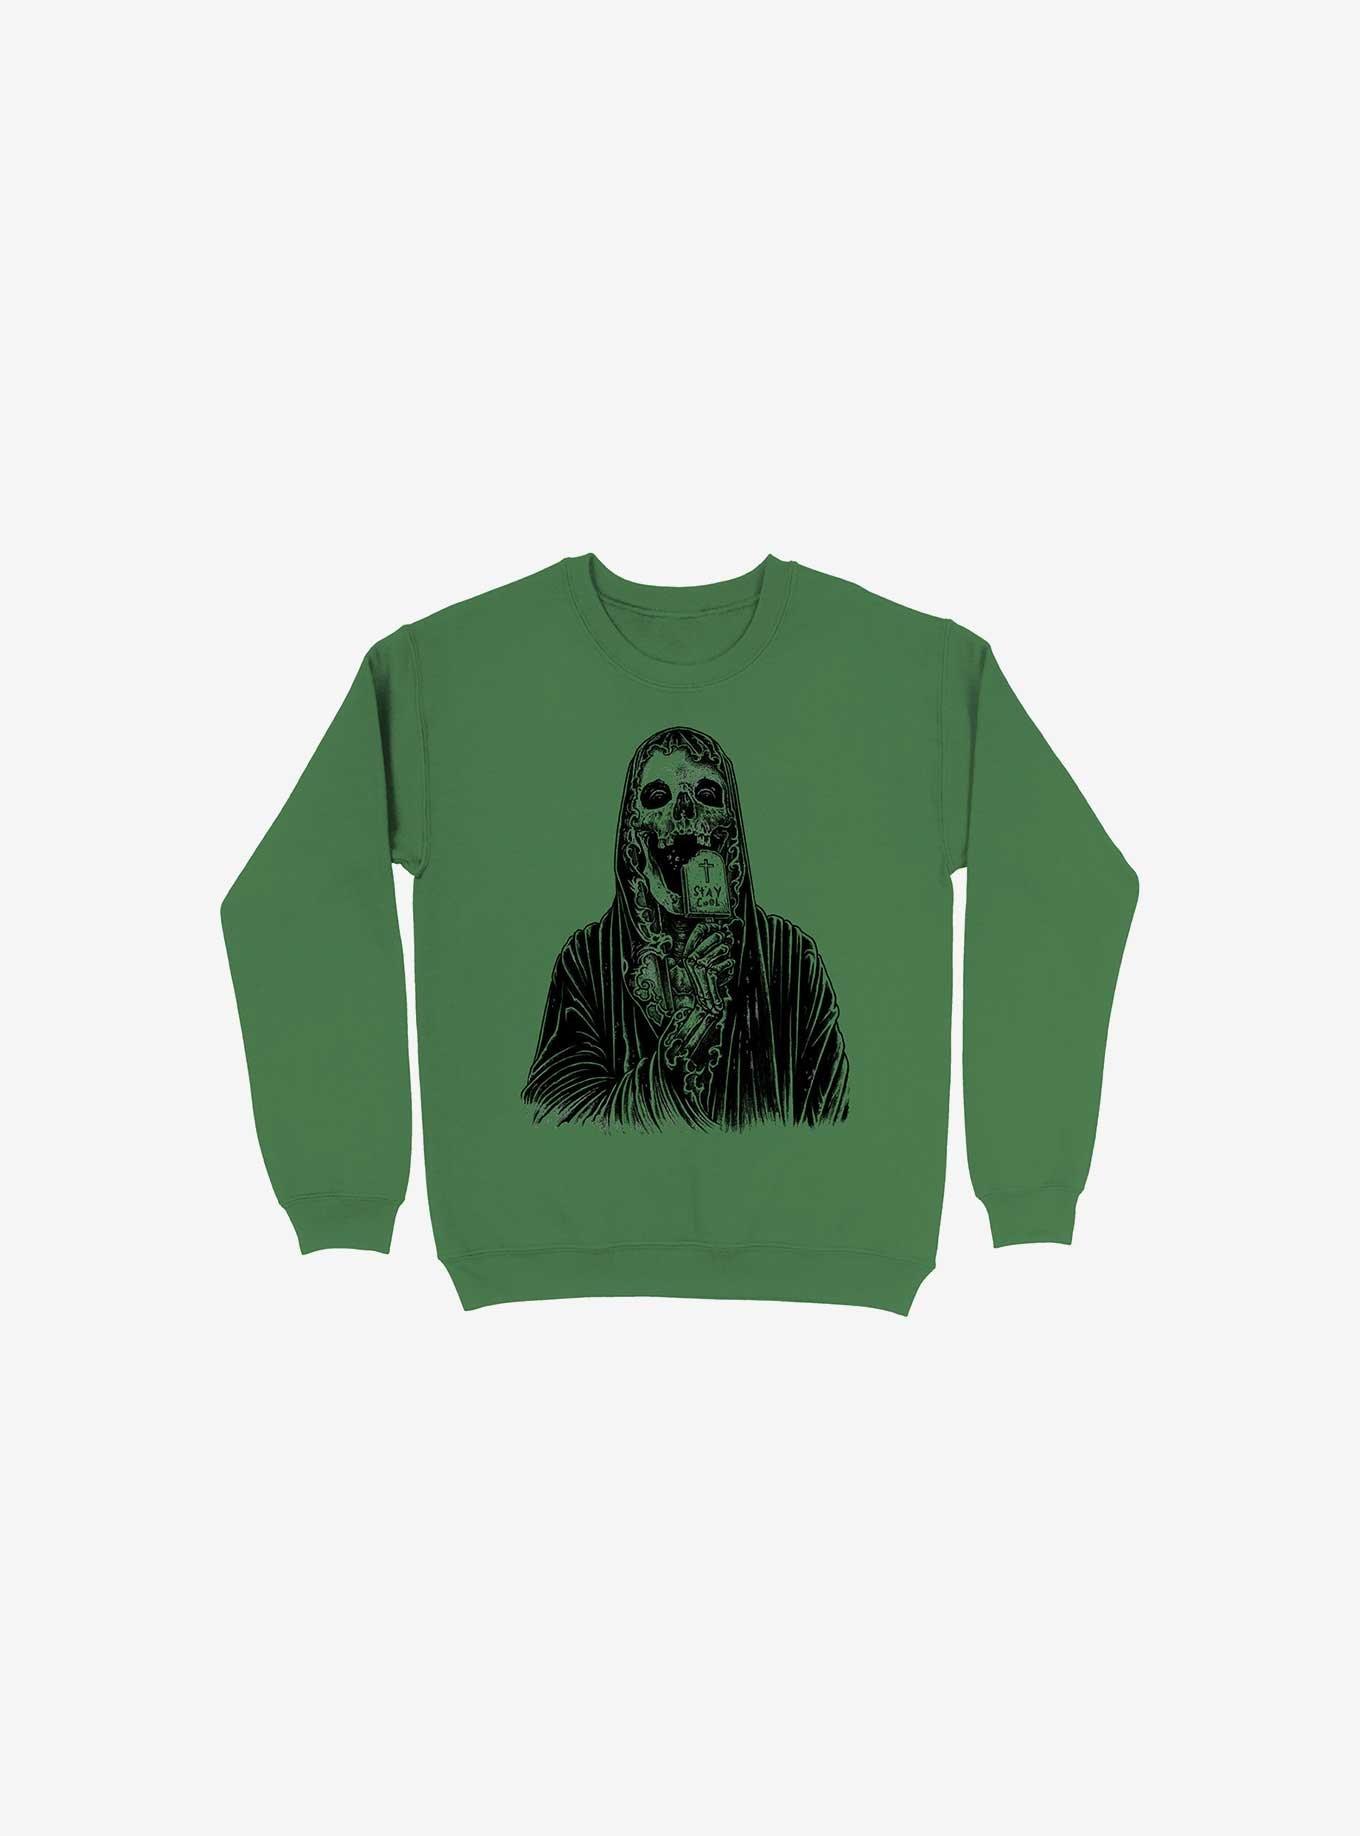 Stay Cool Kelly Green Sweatshirt, KELLY GREEN, hi-res